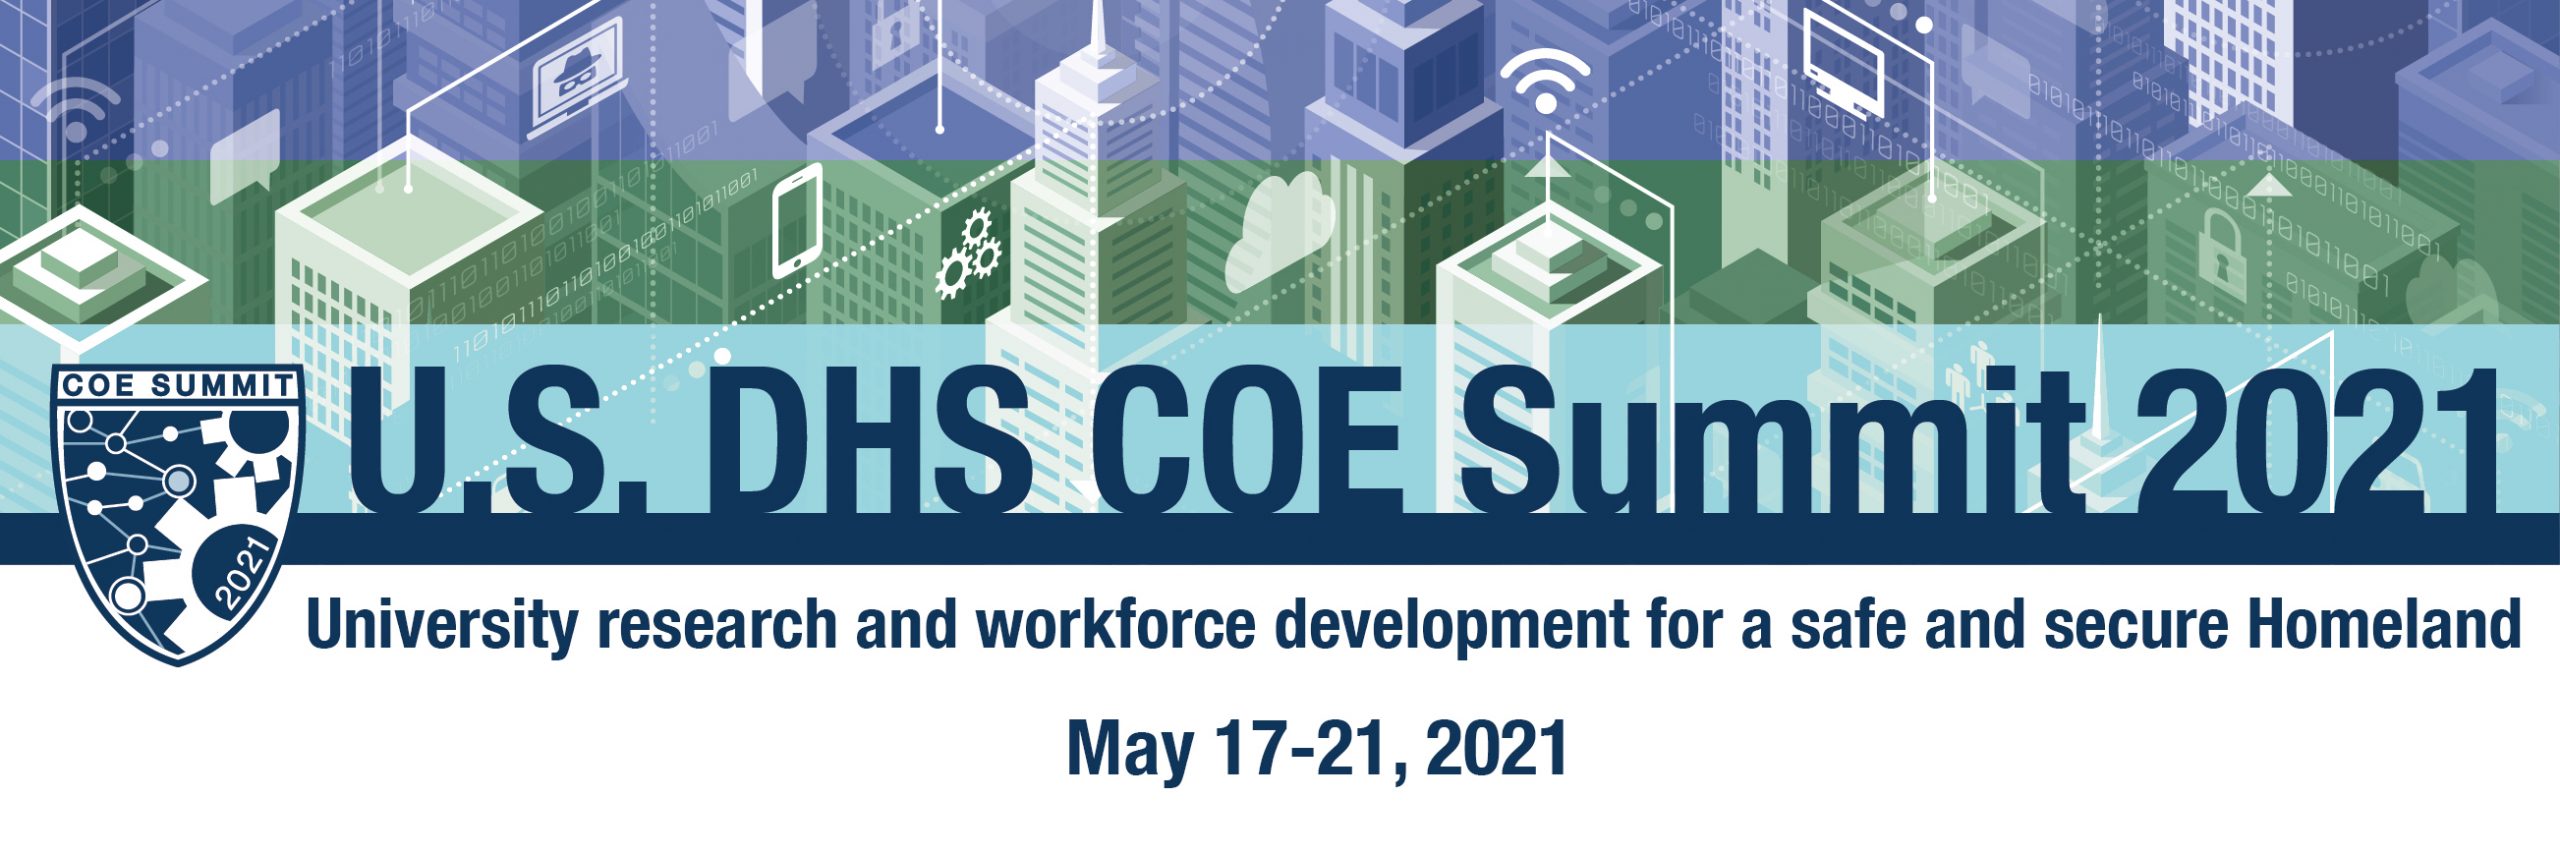 COE Summit 2021 logo